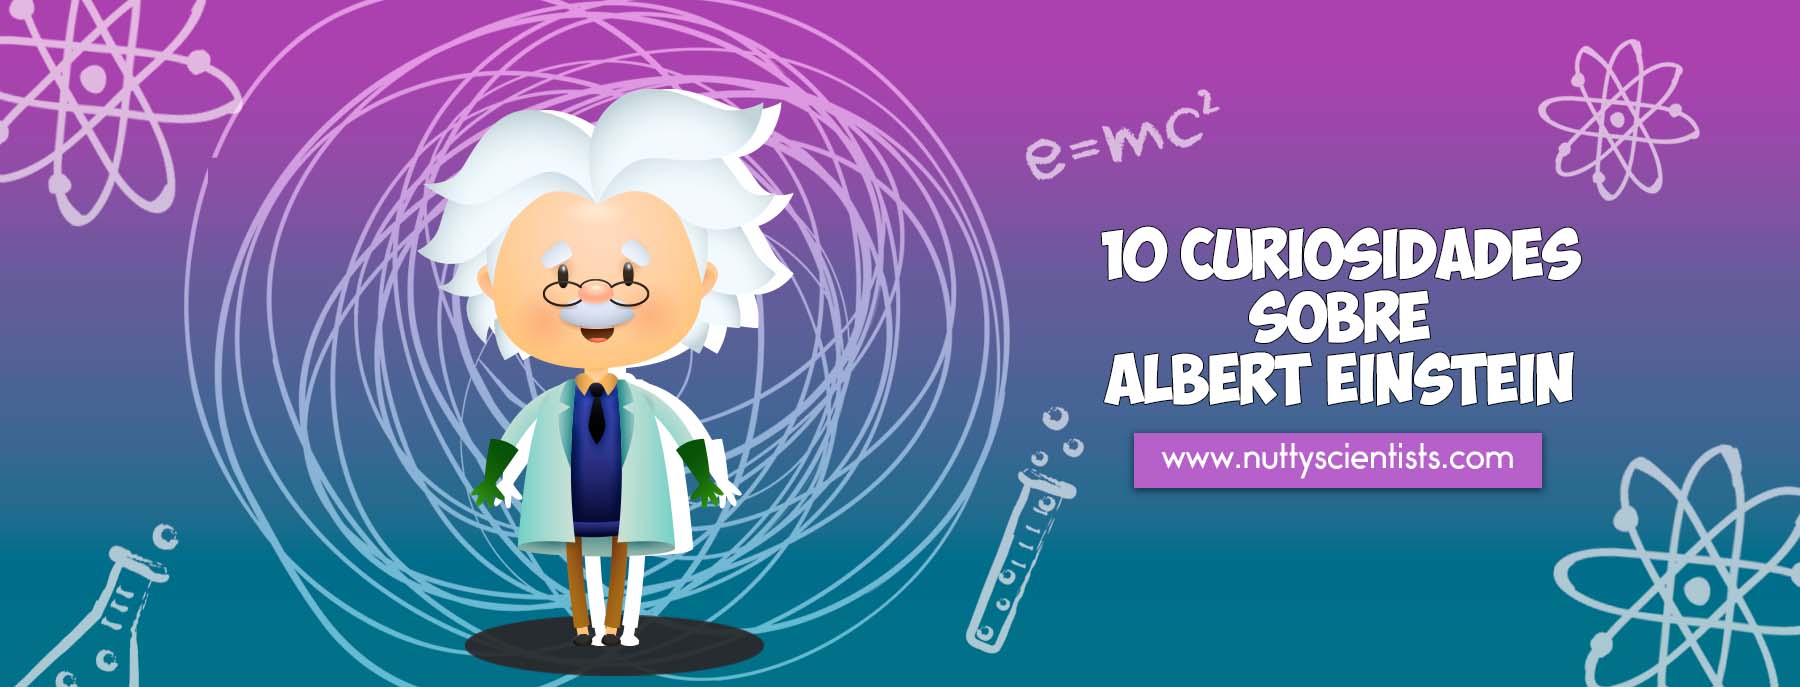 10 curiosidades sobre Albert Einstein - Ciencia Divertida Madrid